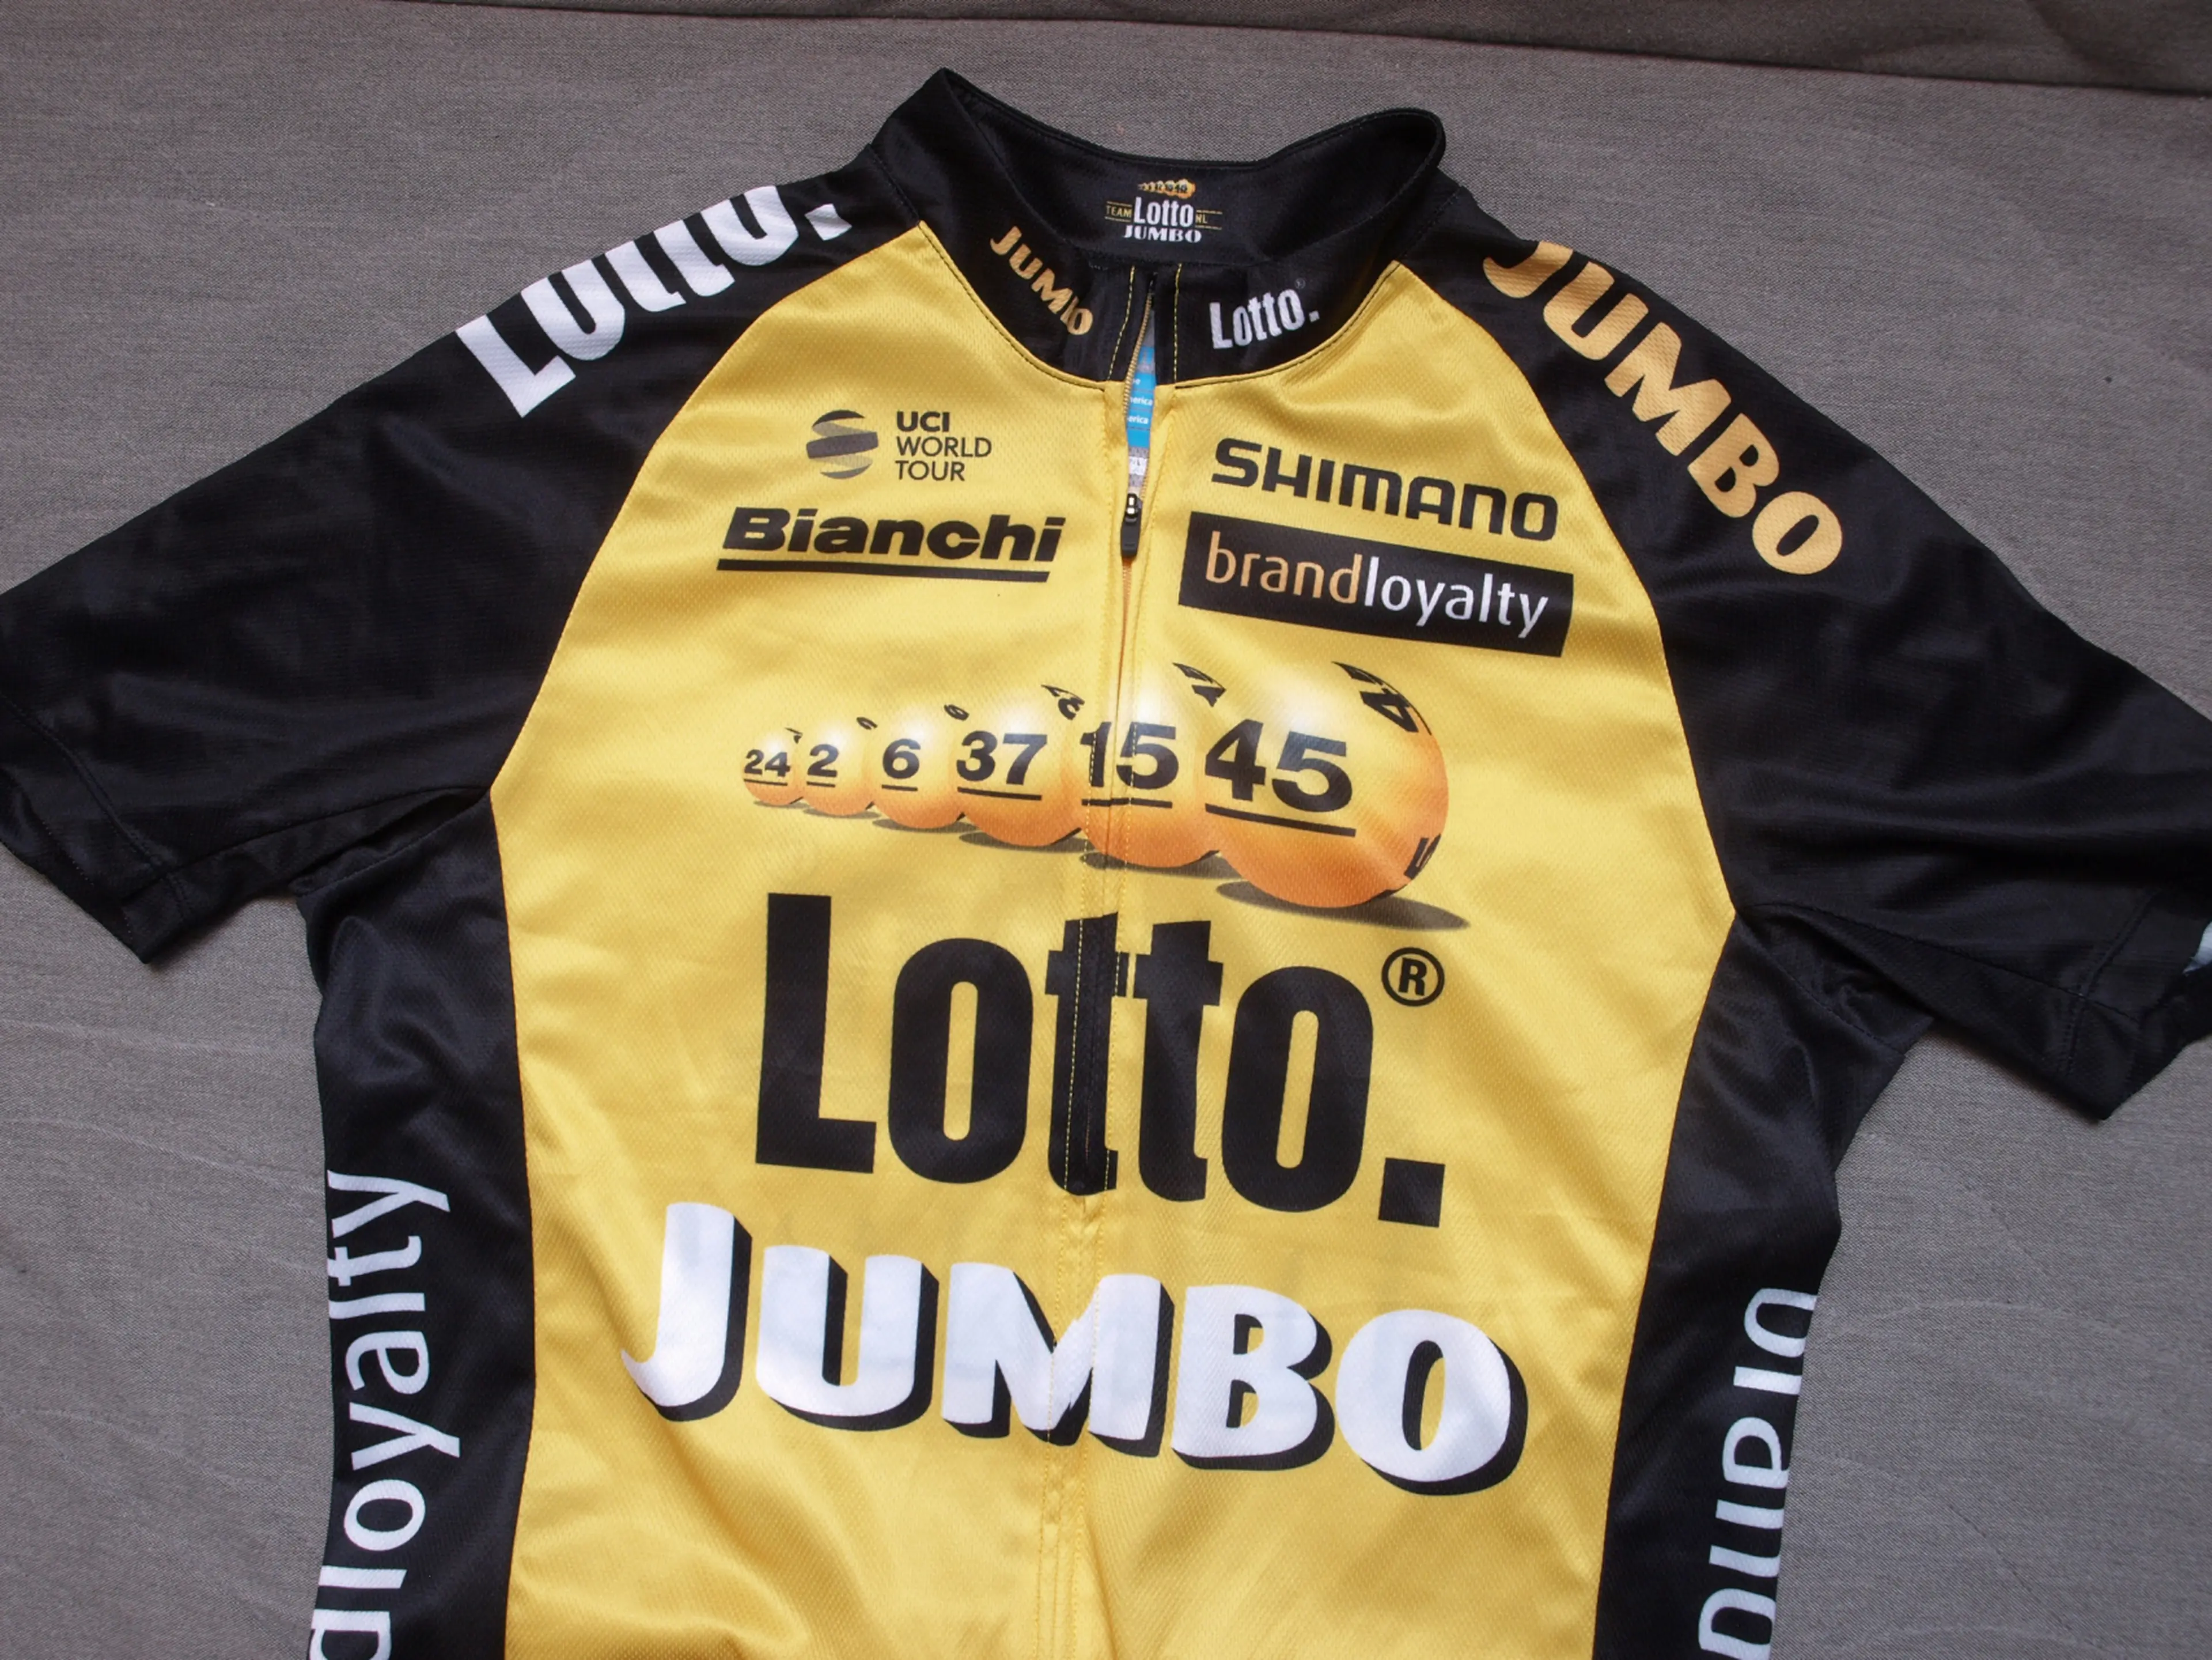 4. Tricou Shimano Lotto Jumbo XL